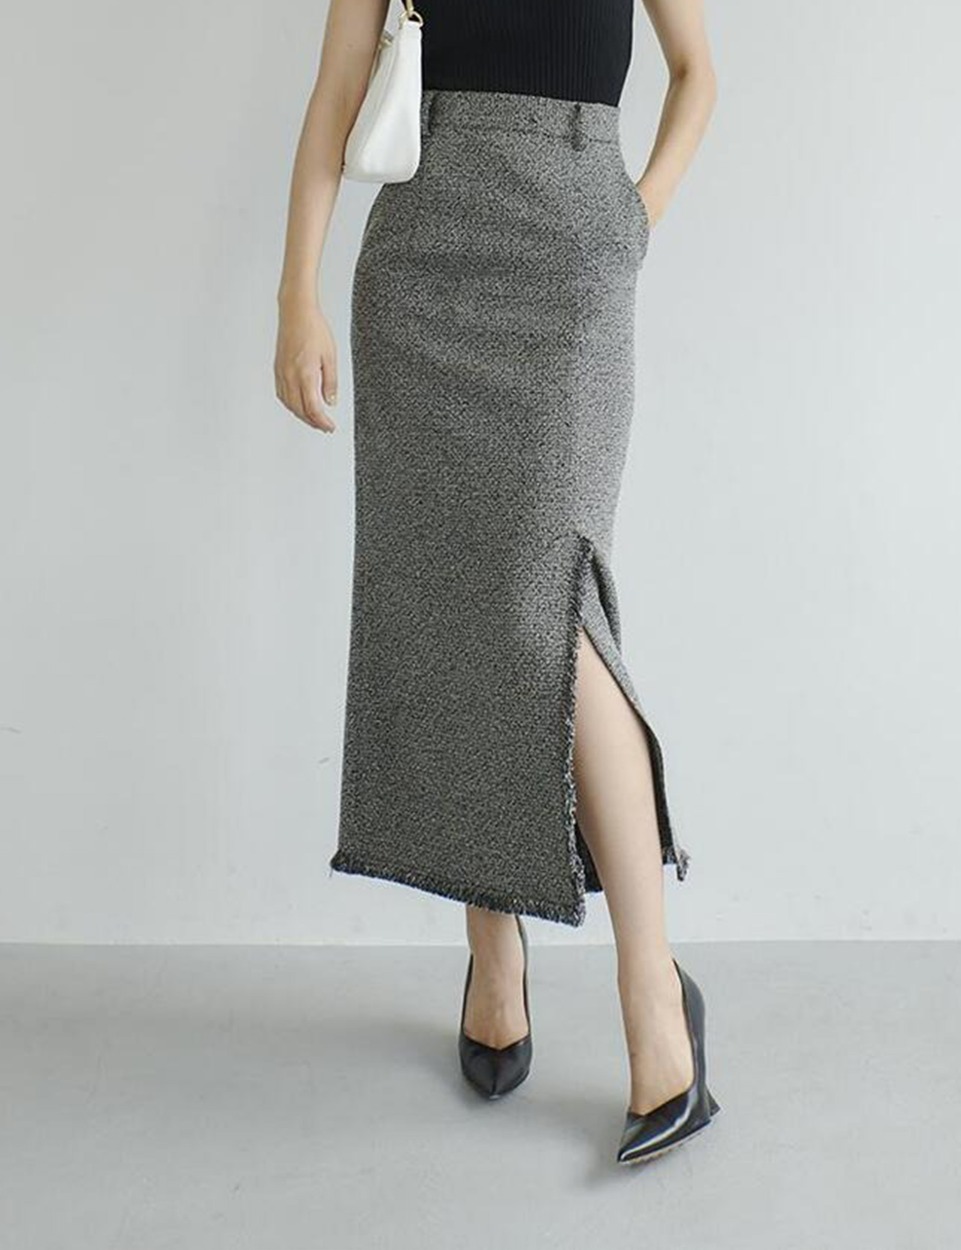 RANDEBOO   French long skirt